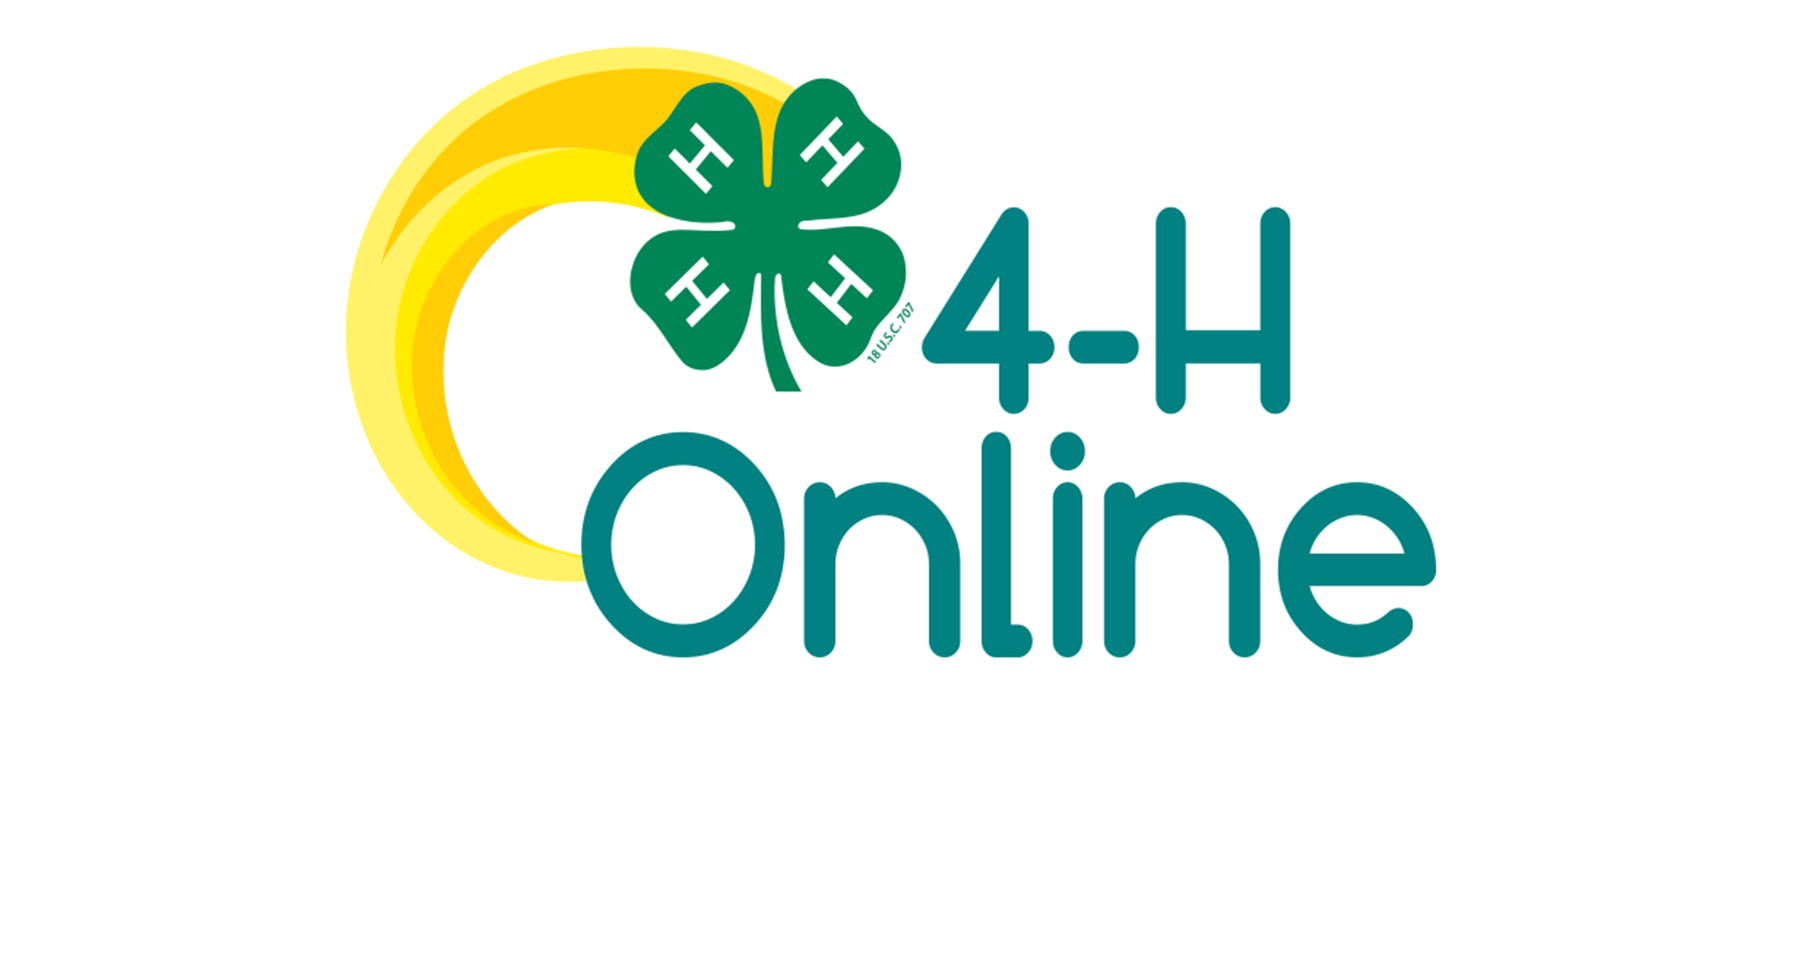 4-H Online logo